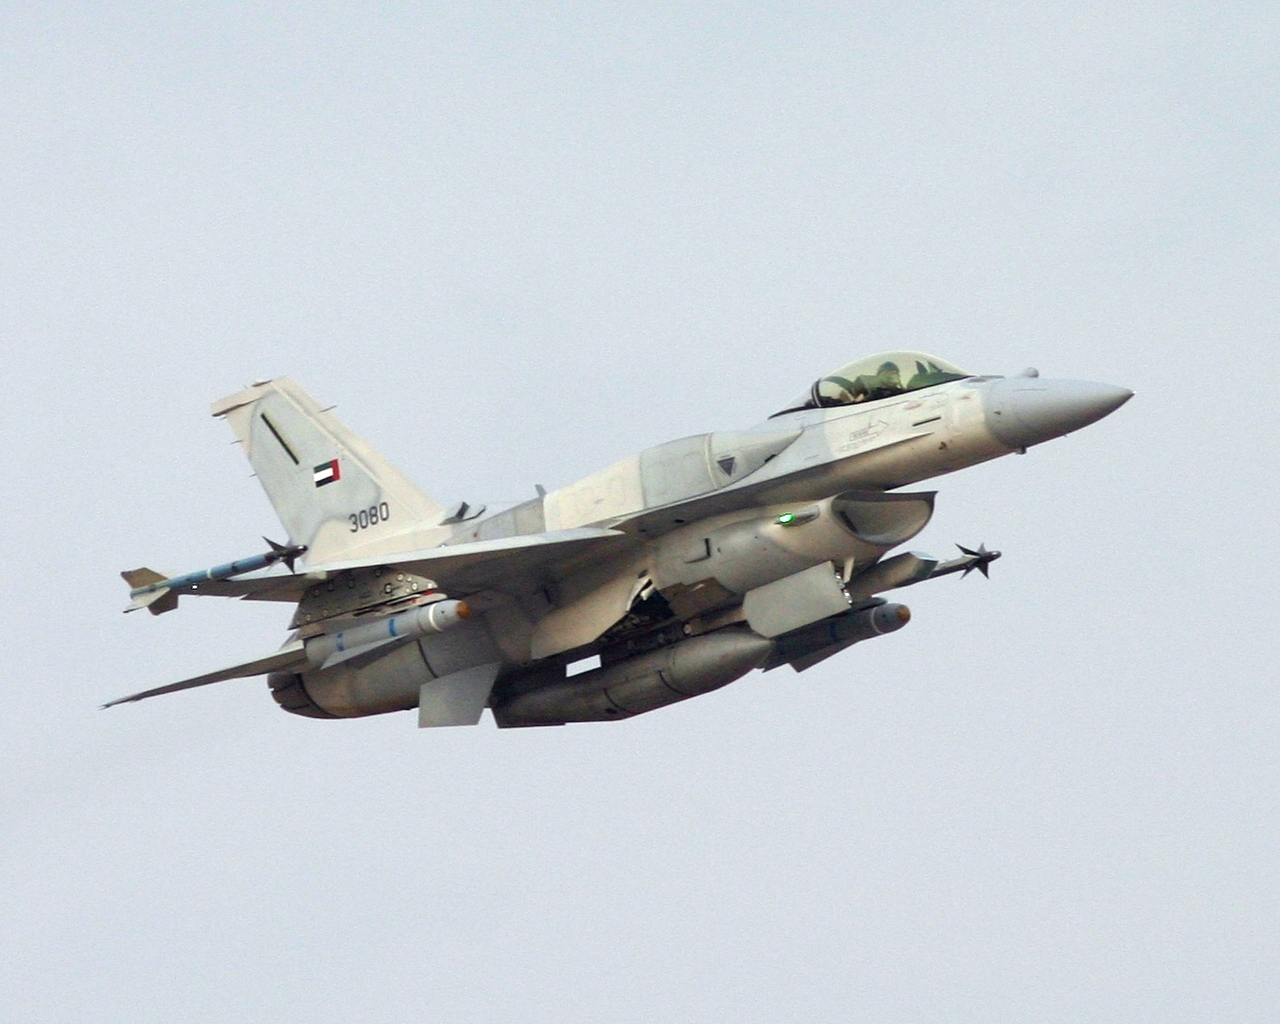                   'Sufa'_F16I (Israel)
Israeli Air Force F-16I 'Sufa' Jet fighter-bomber